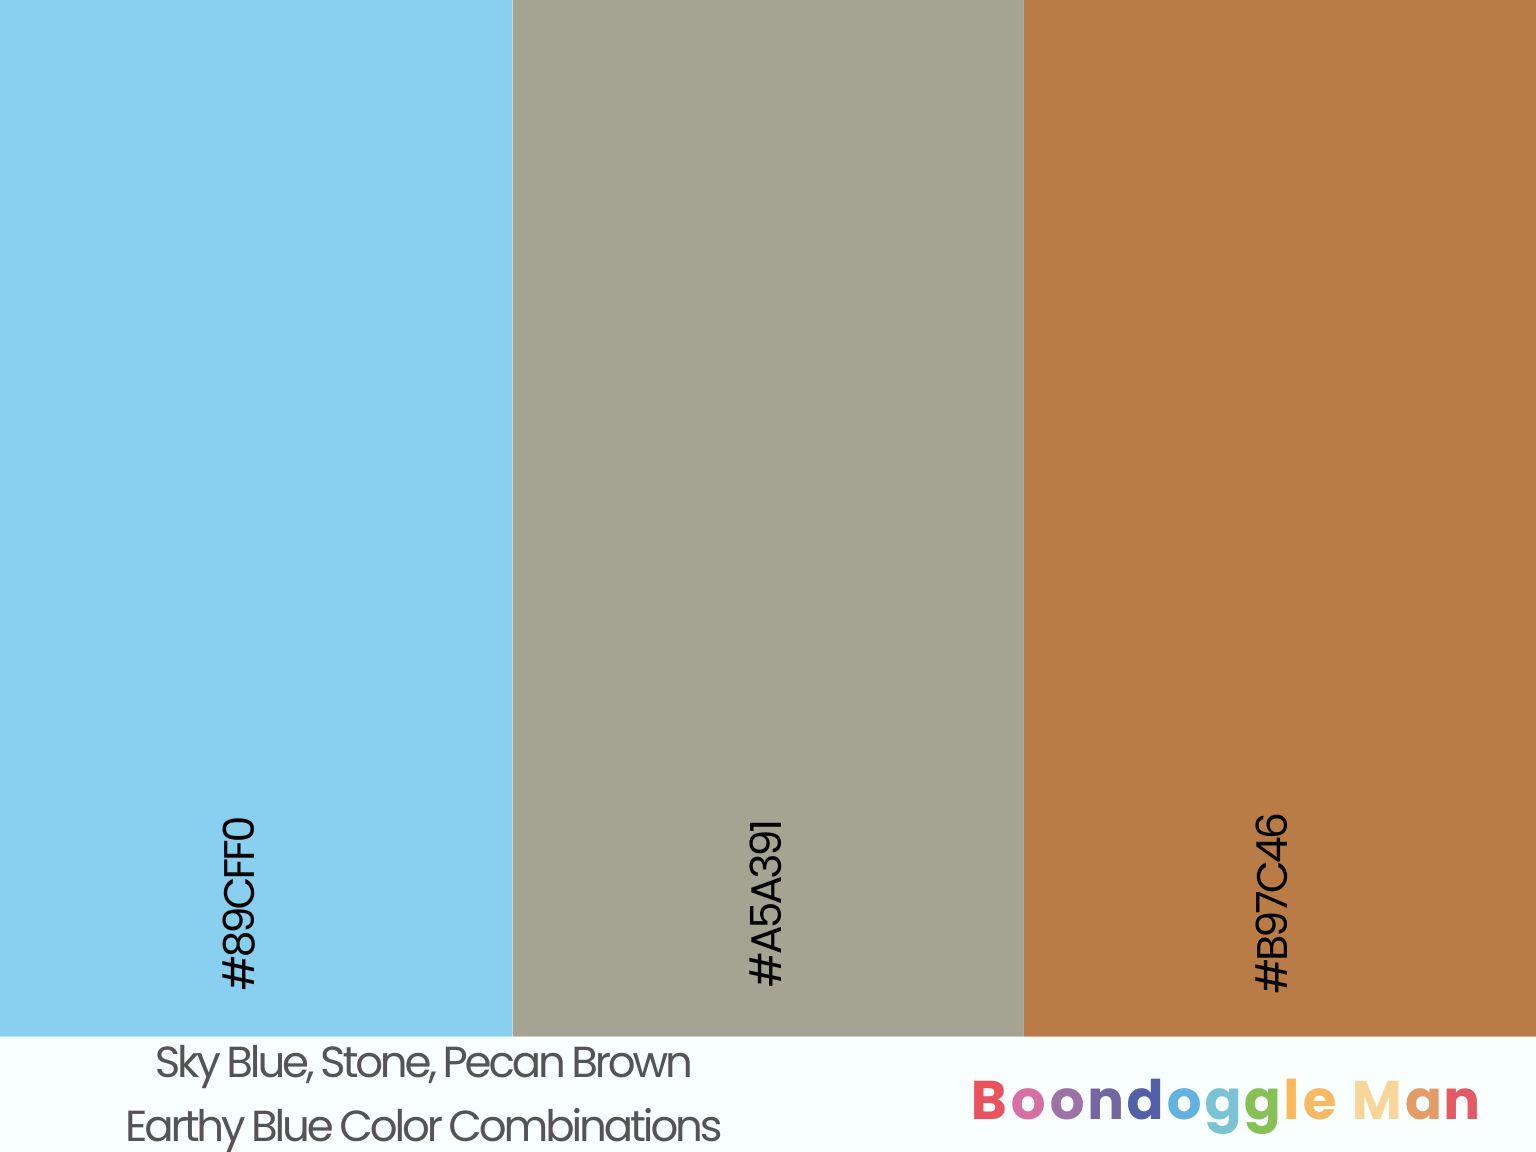 Sky Blue, Stone, Pecan Brown